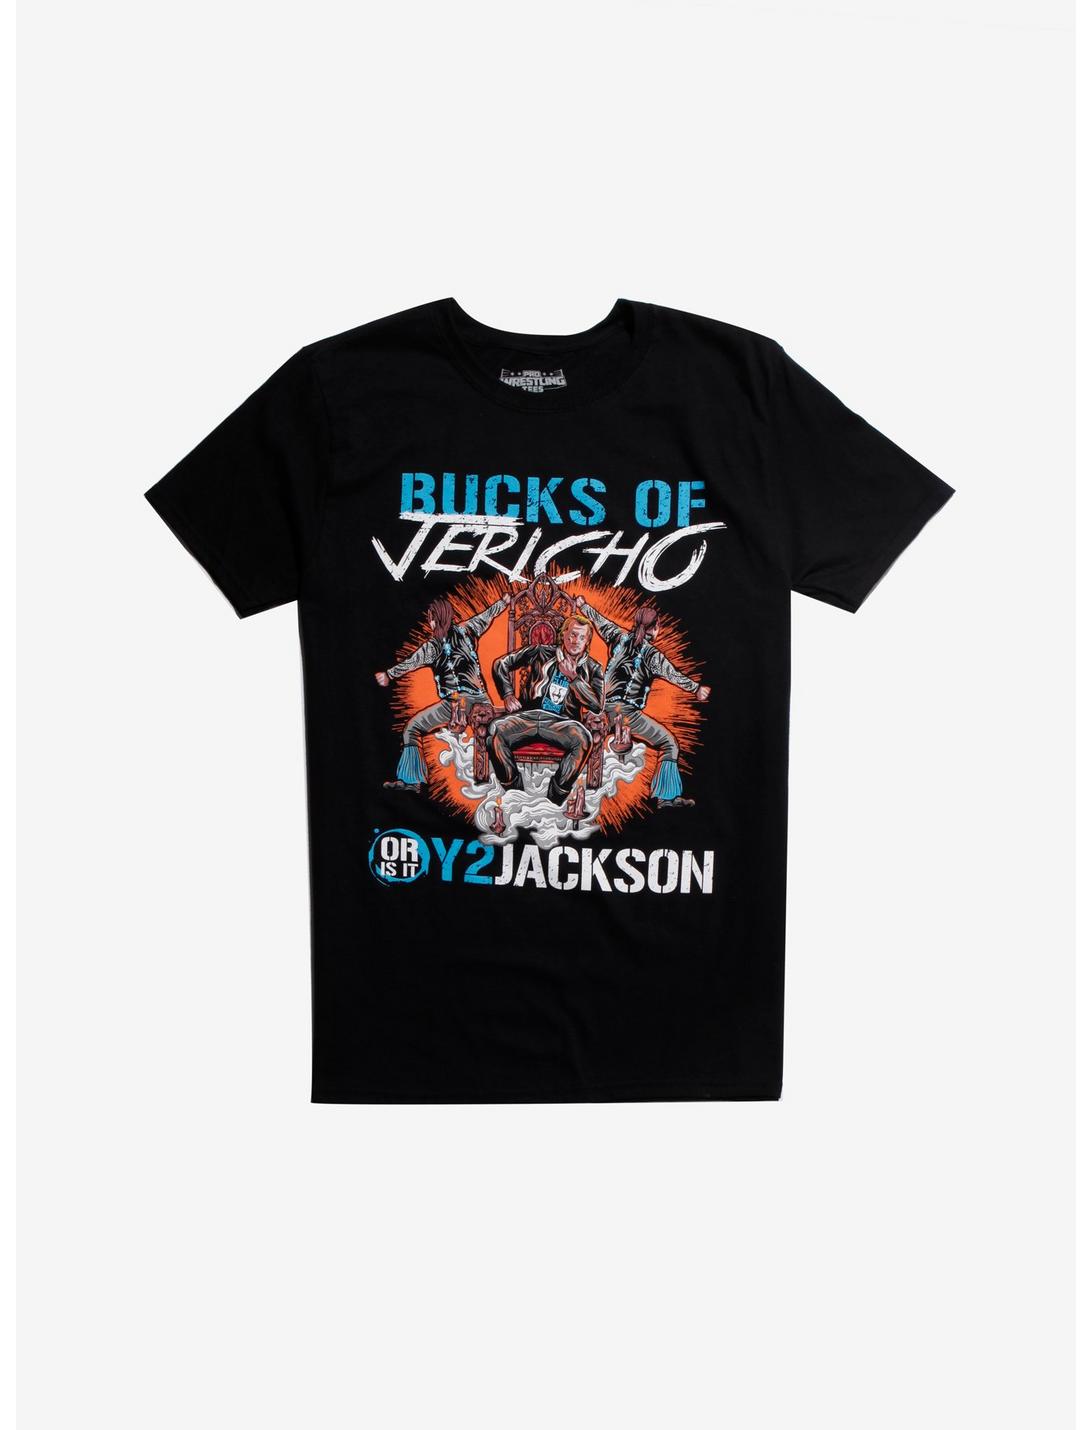 Pro-Wrestling Bucks Of Jericho Y2Jackson T-Shirt, BLACK, hi-res